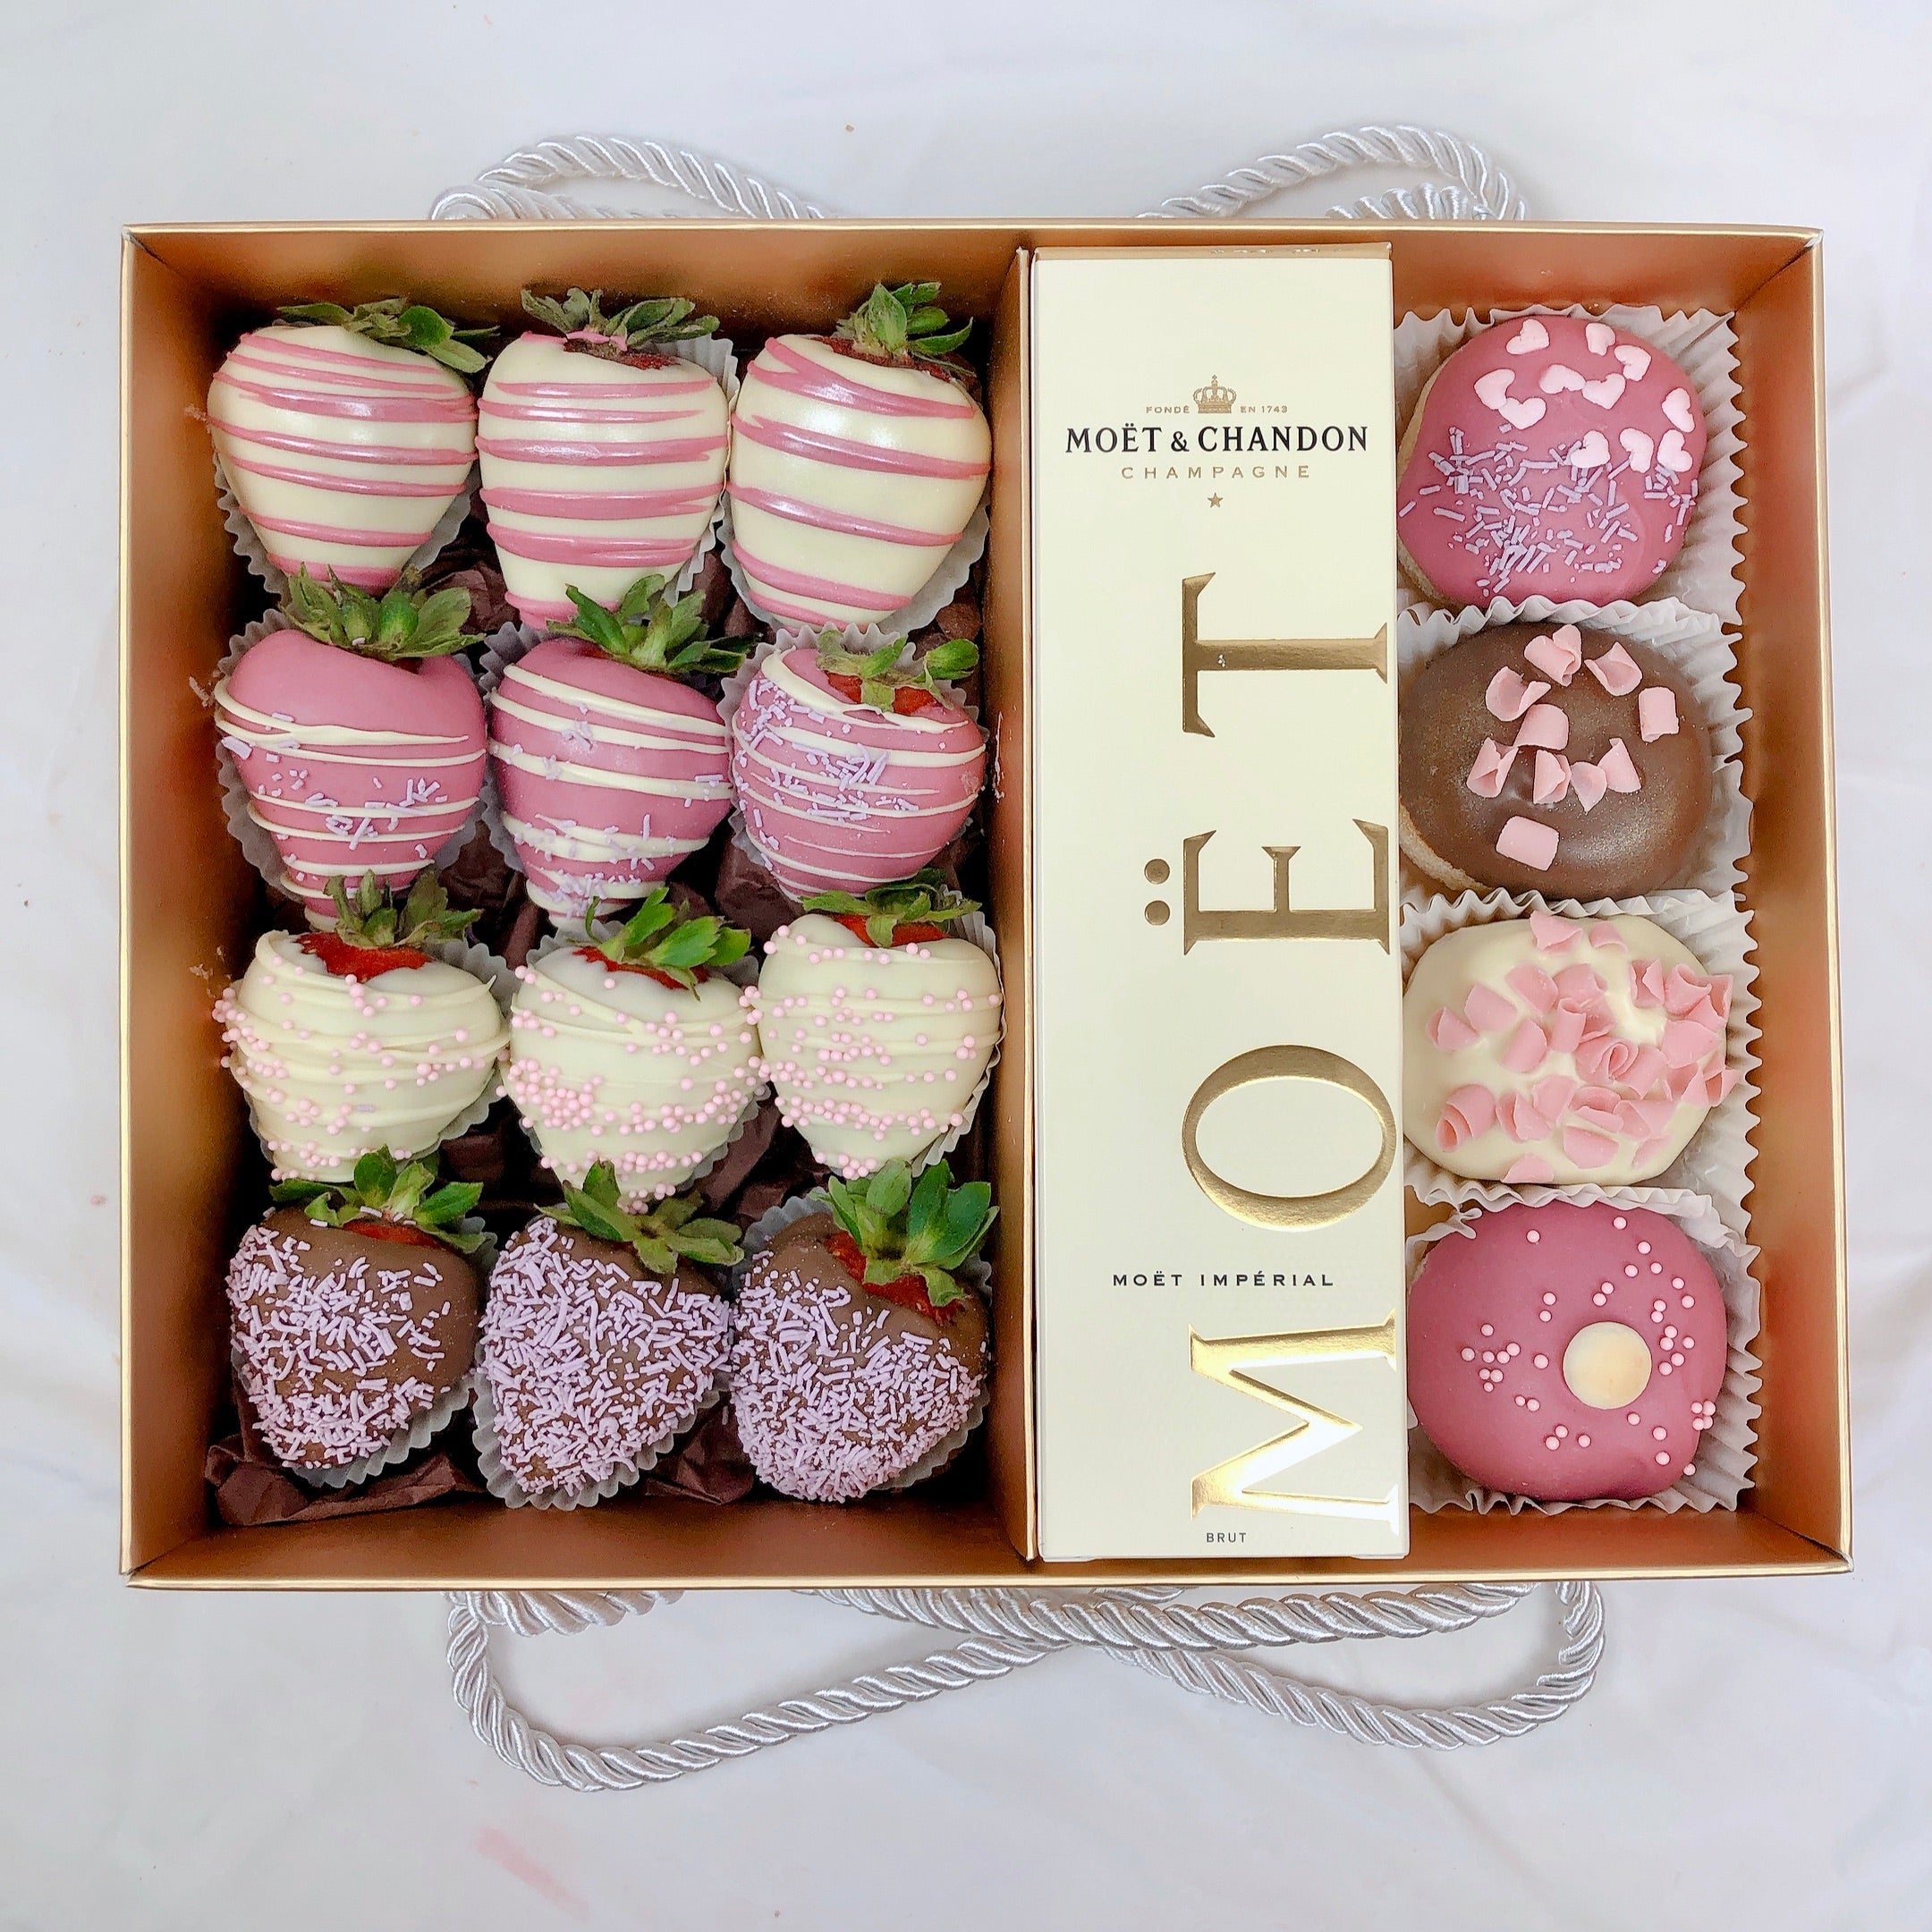 gourmet gift baskets for women, pink chocolate gift hamper, doughnut and chocolate strawberries champagne gift hamper